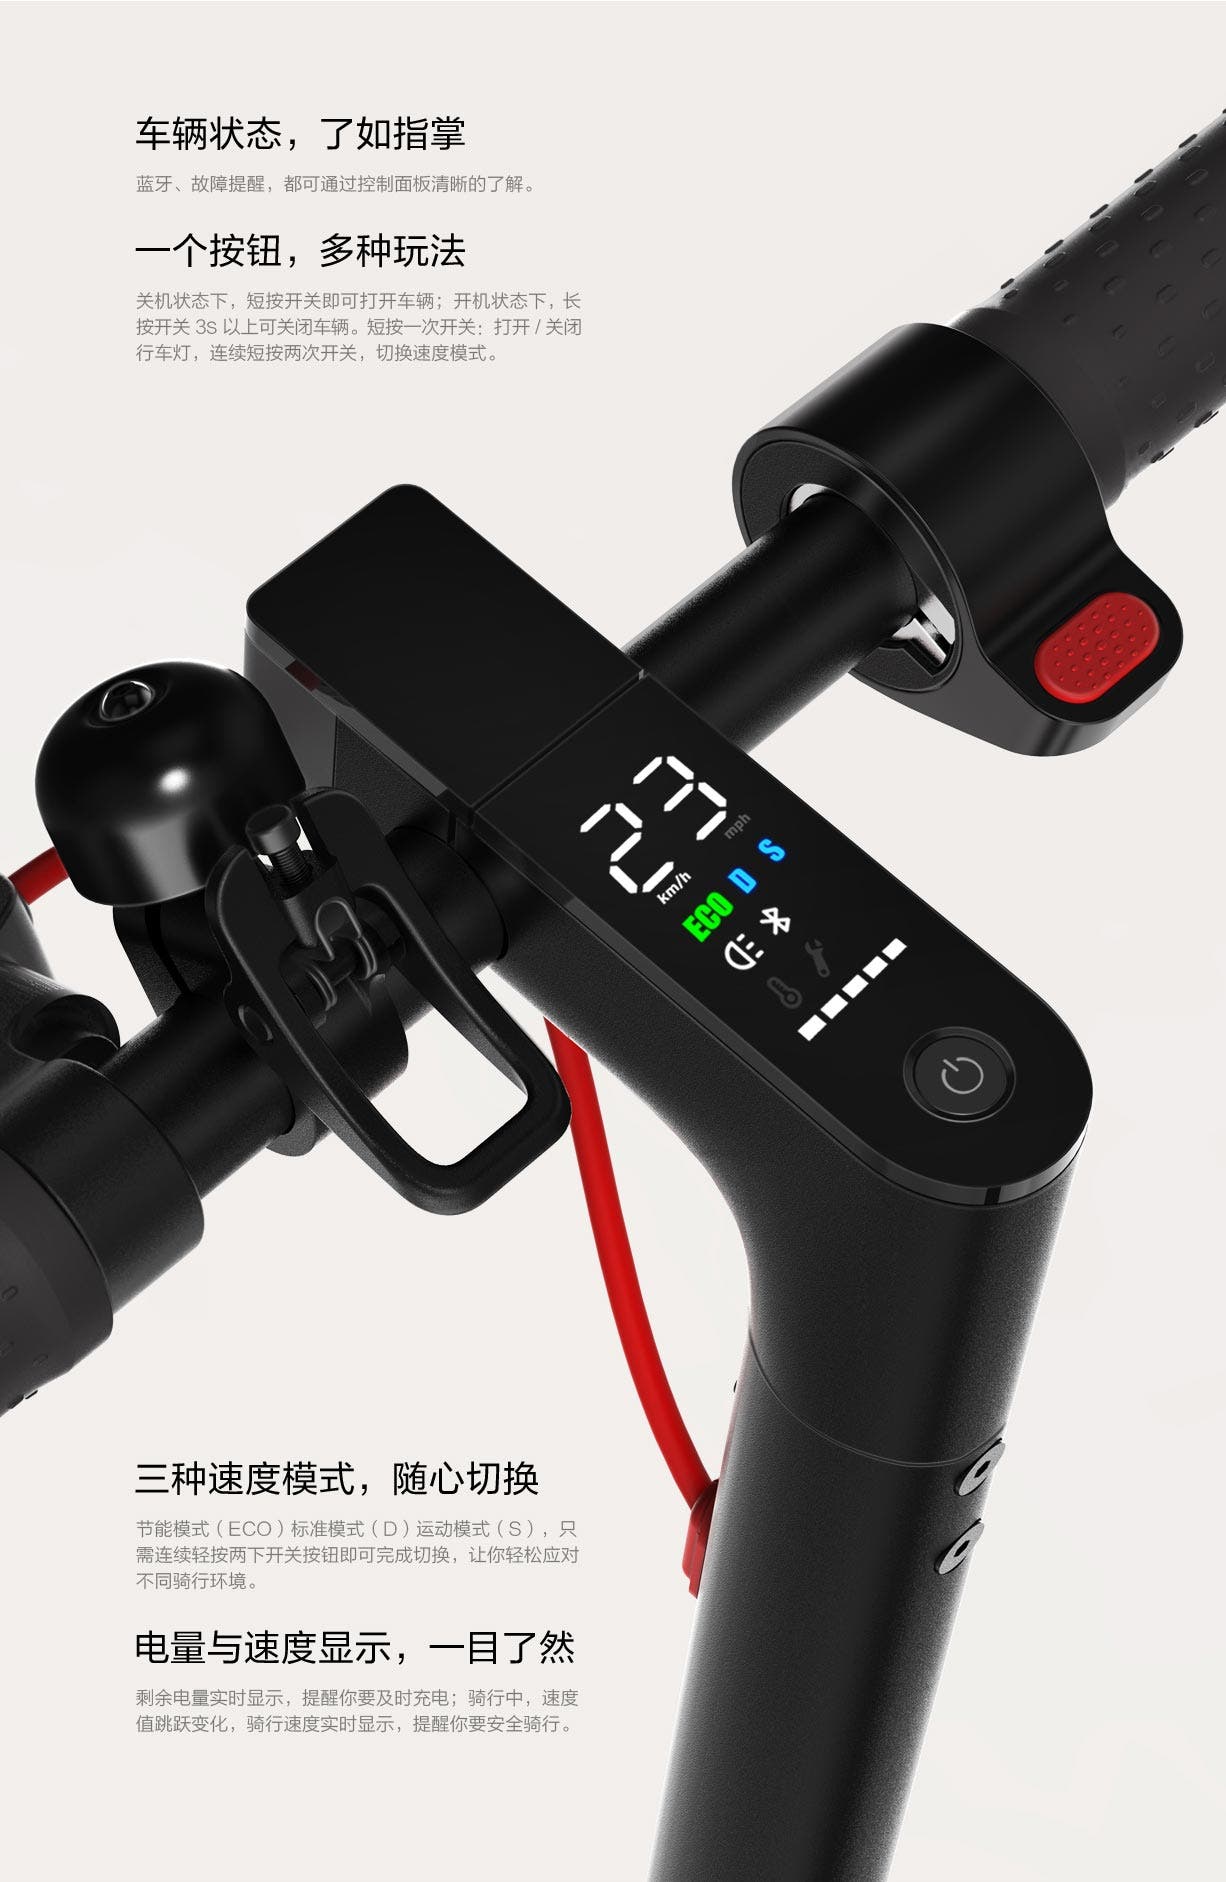 Xiaomi Mijia Electric Scooter Pro